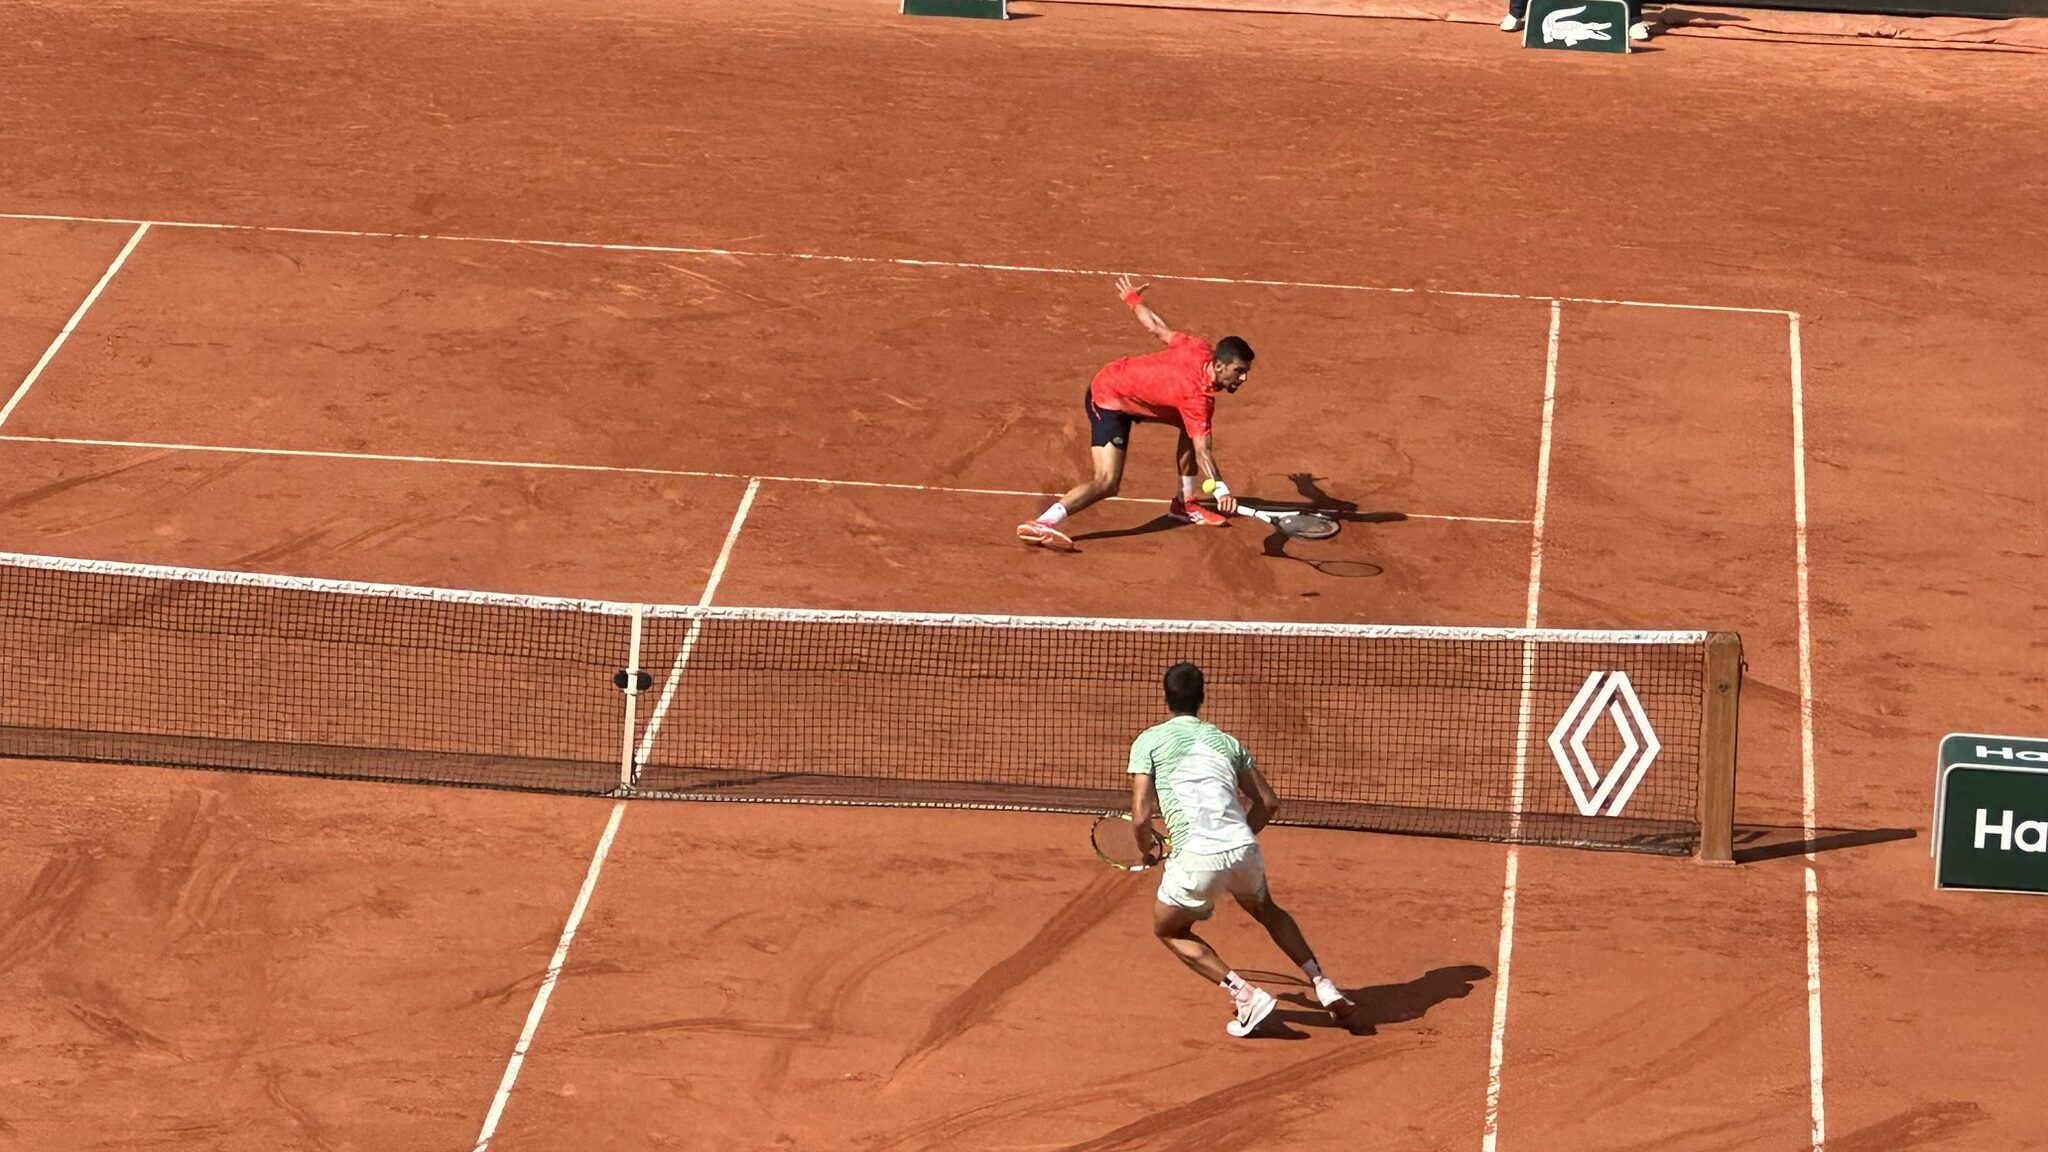 ATP Dubai: Novak Djokovic easily reaches the round of 16